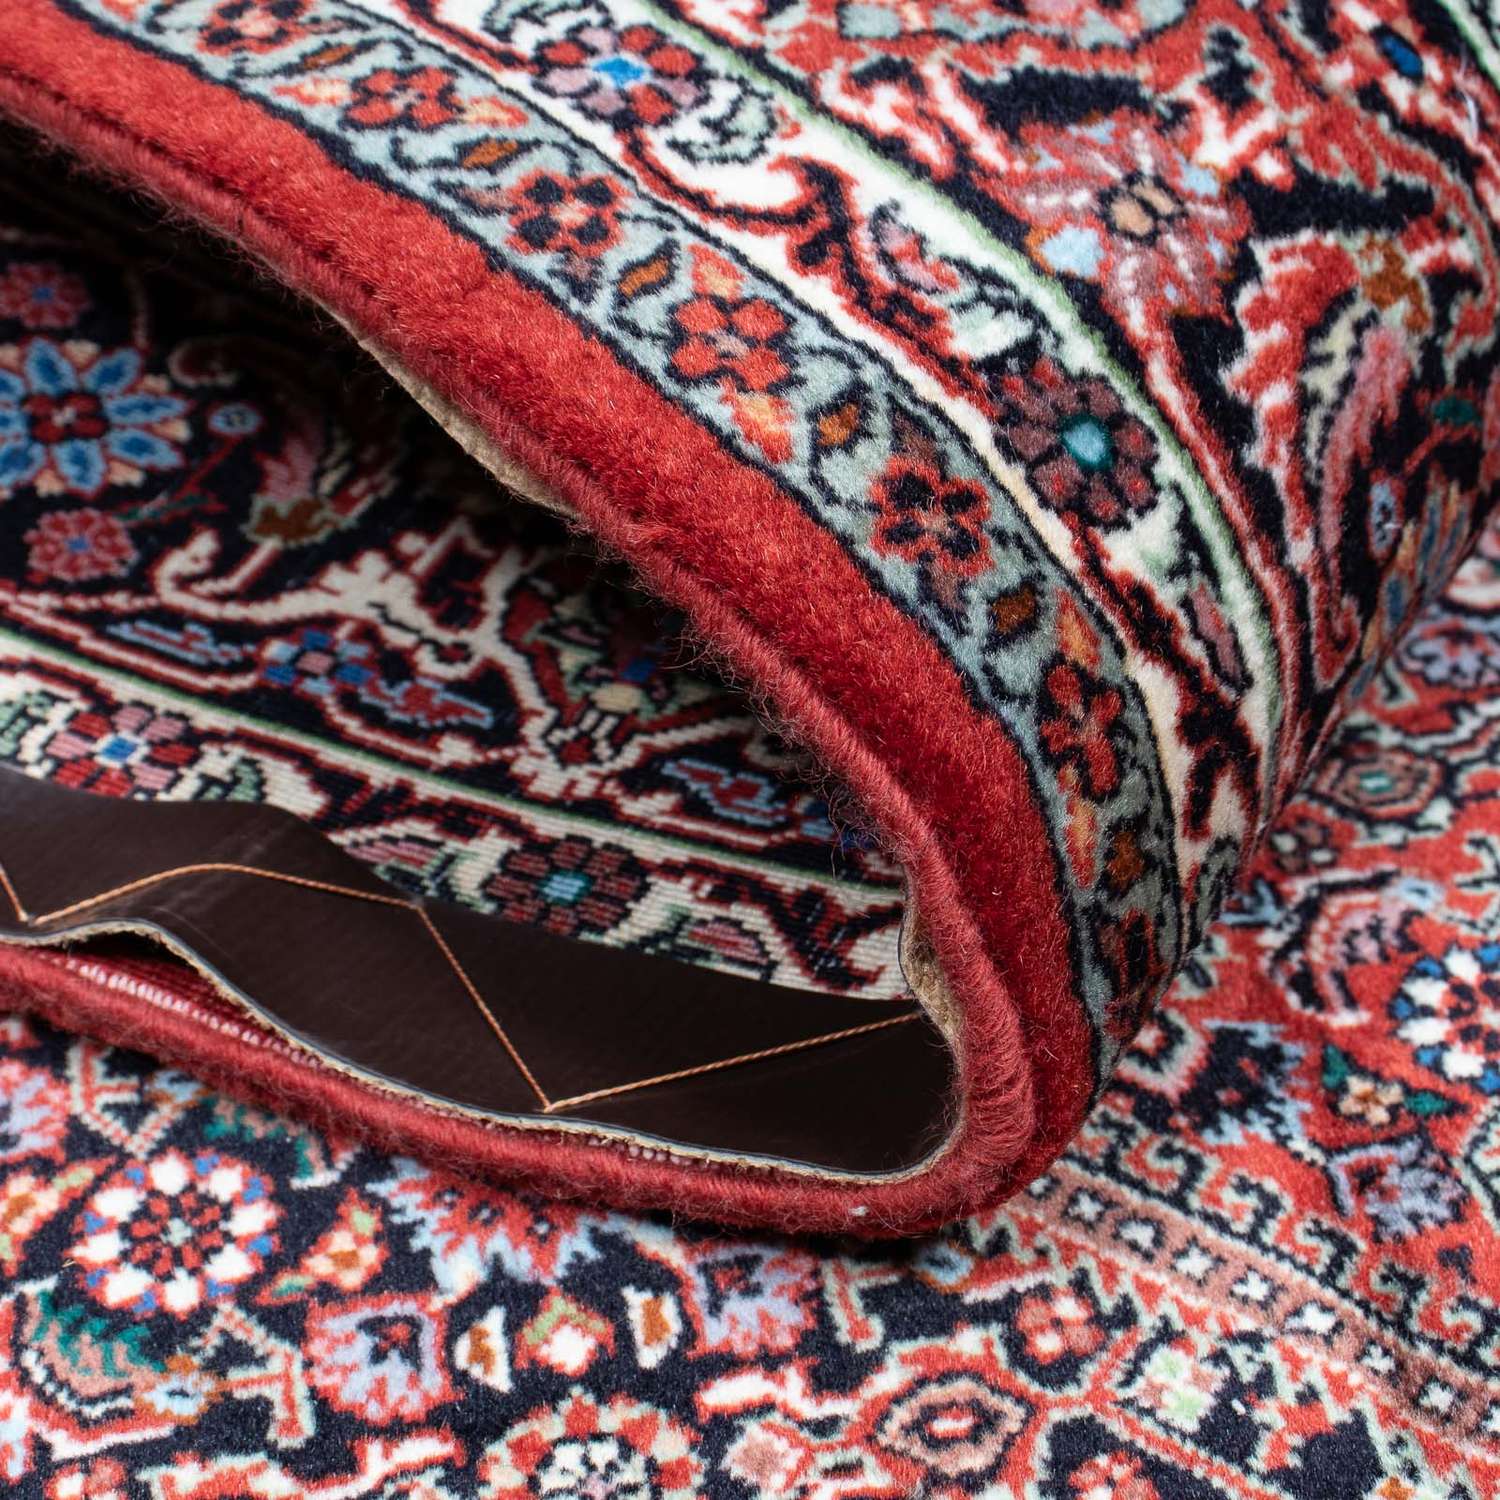 Perzisch tapijt - Bijar - 209 x 132 cm - licht rood